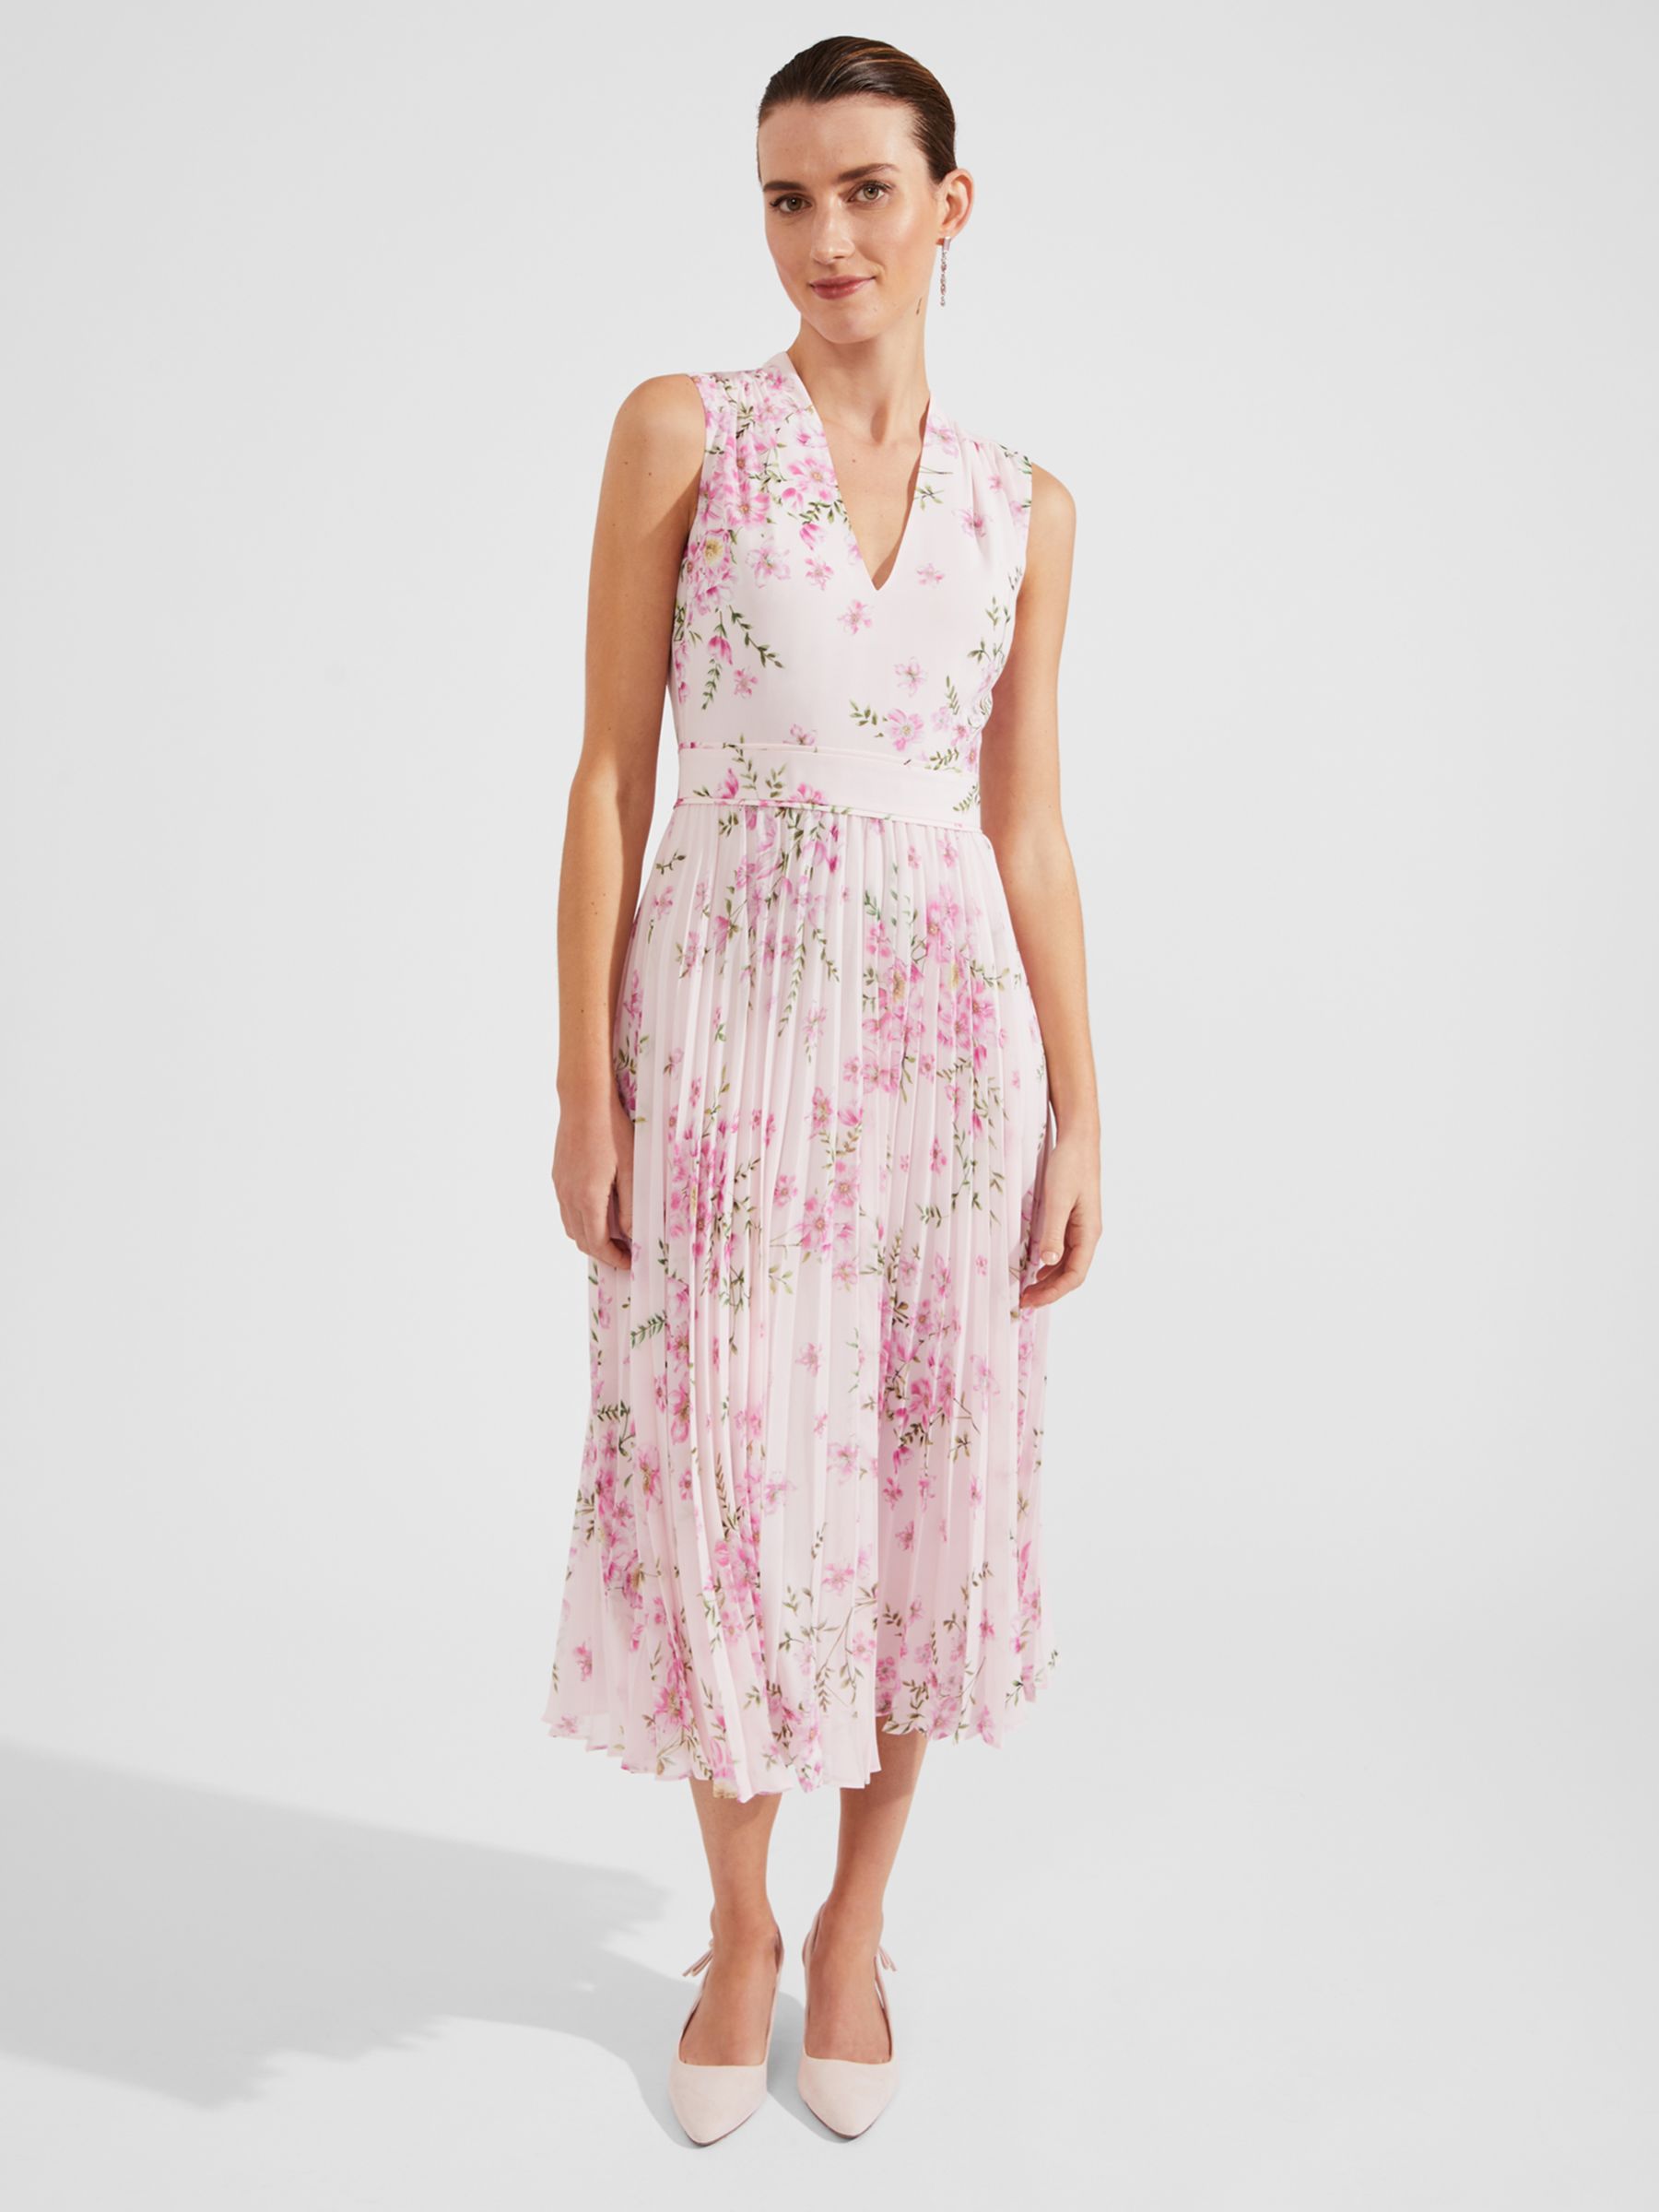 Hobbs Petite Veronica Floral Print Pleated Maxi Dress, Pink/Multi, 10